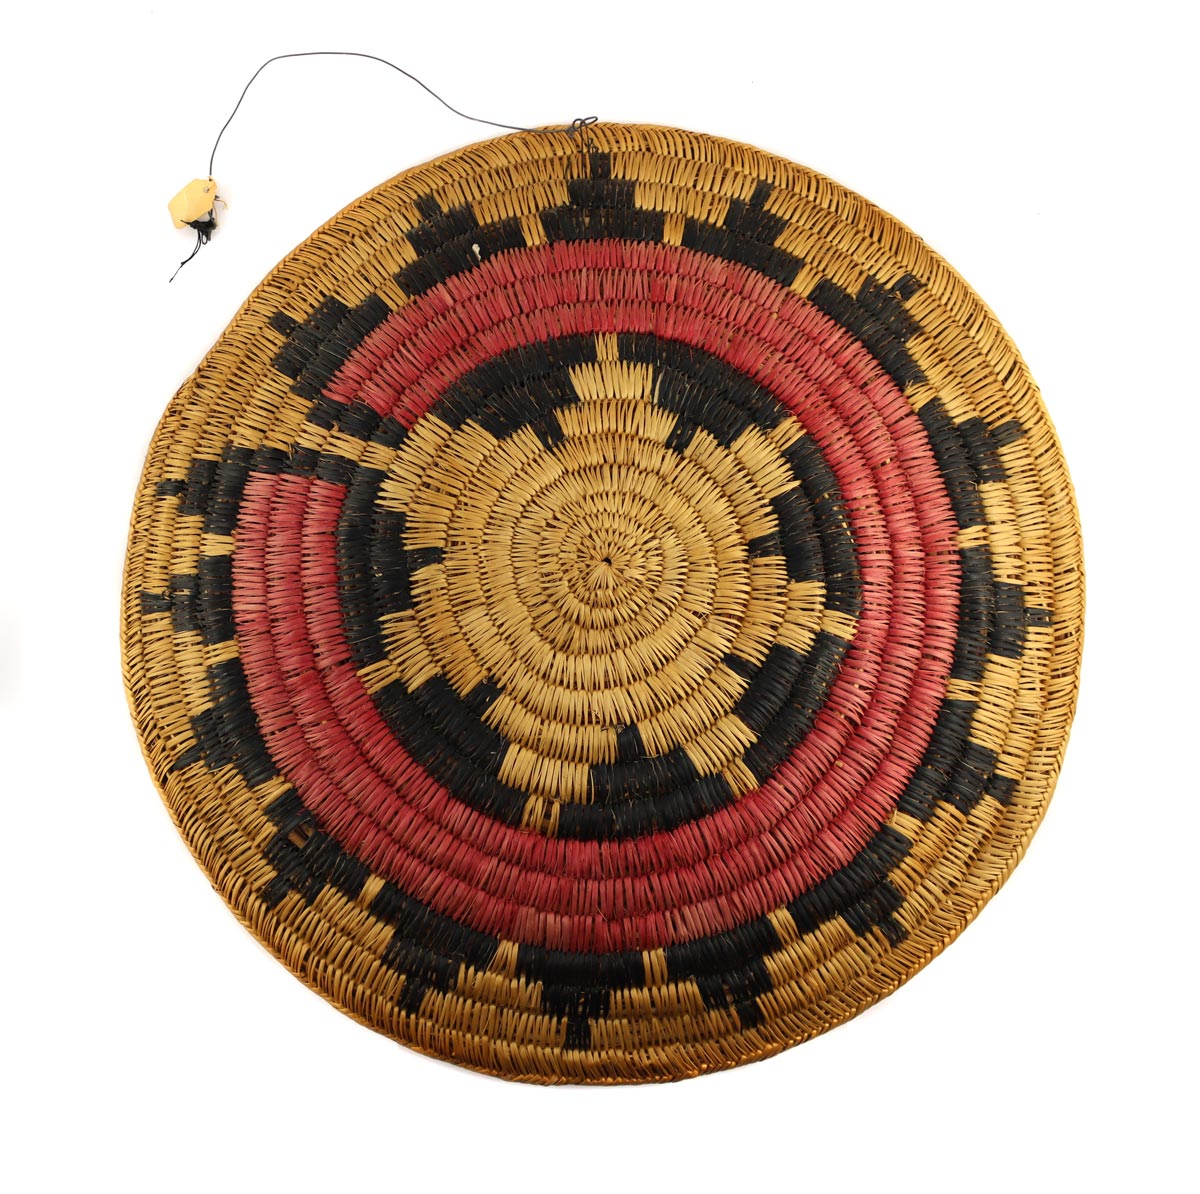 Navajo Polychrome Wedding Basket c. 1940s, 14" diameter (SK90642A-1023-001)